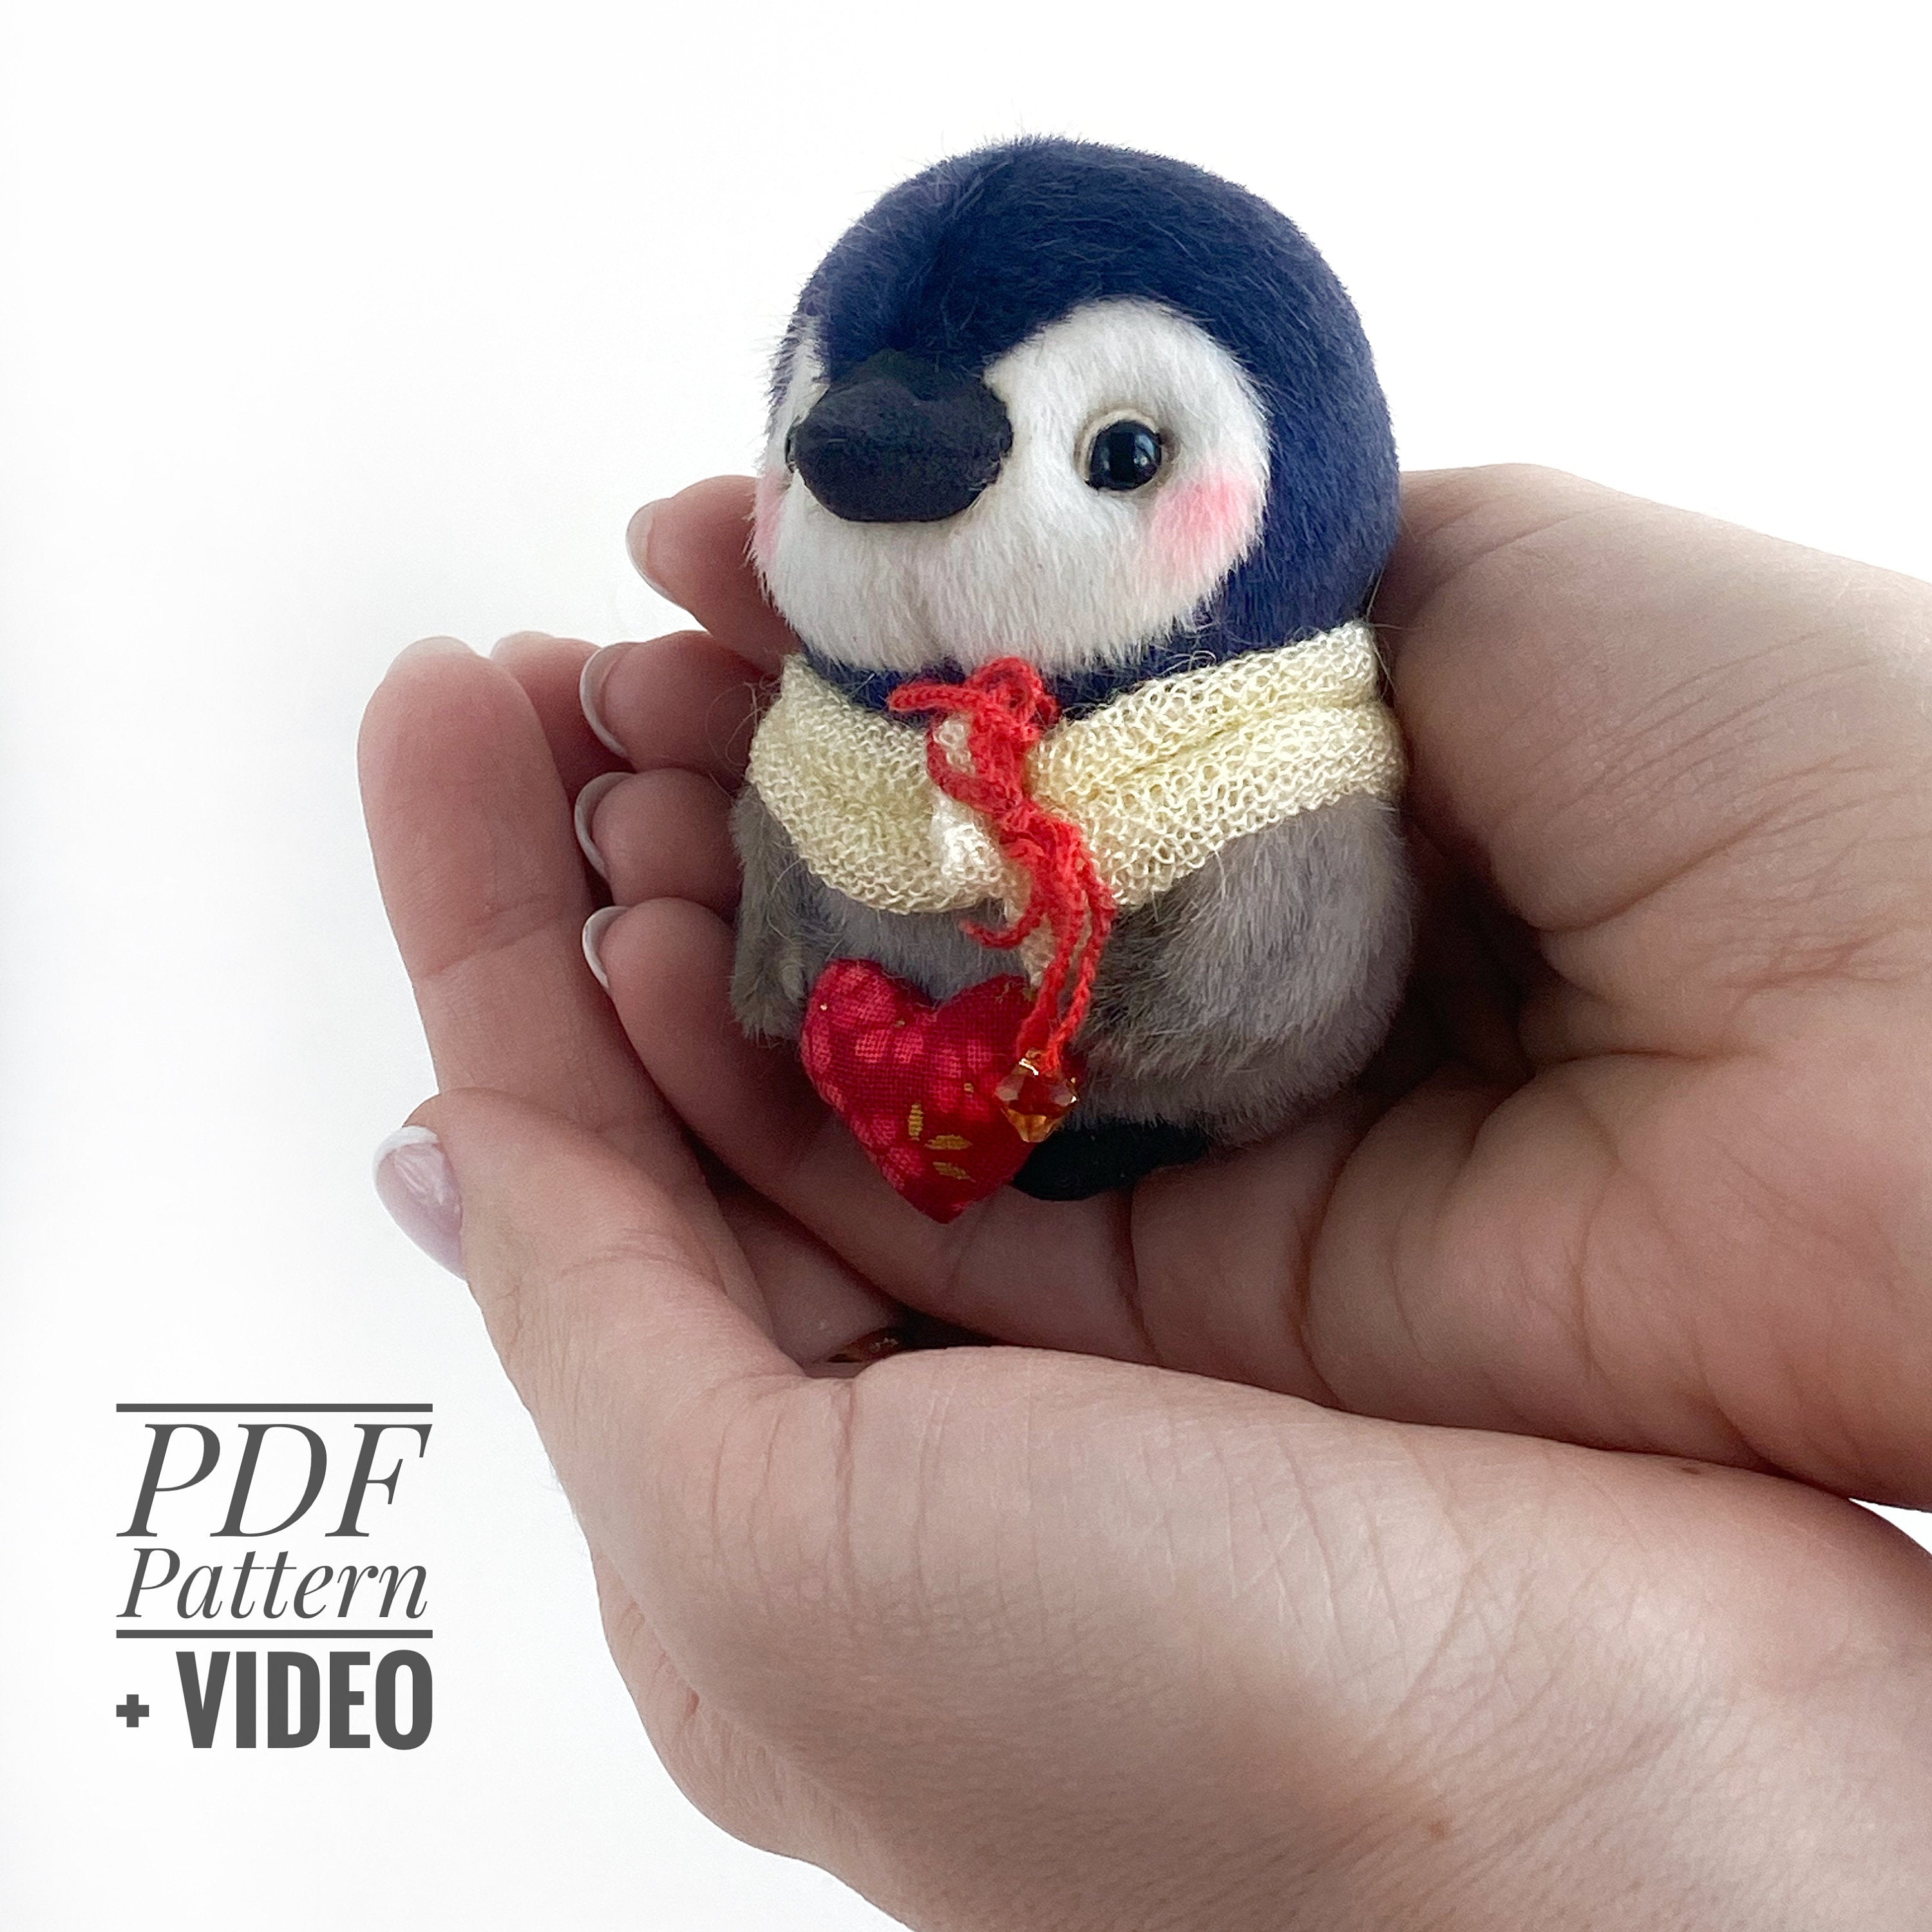 Penguin PDF sewing pattern Video tutorial DIY stuffed toy pattern DIY penguin toy kids toy pattern easy to sew for beginners TSminibears